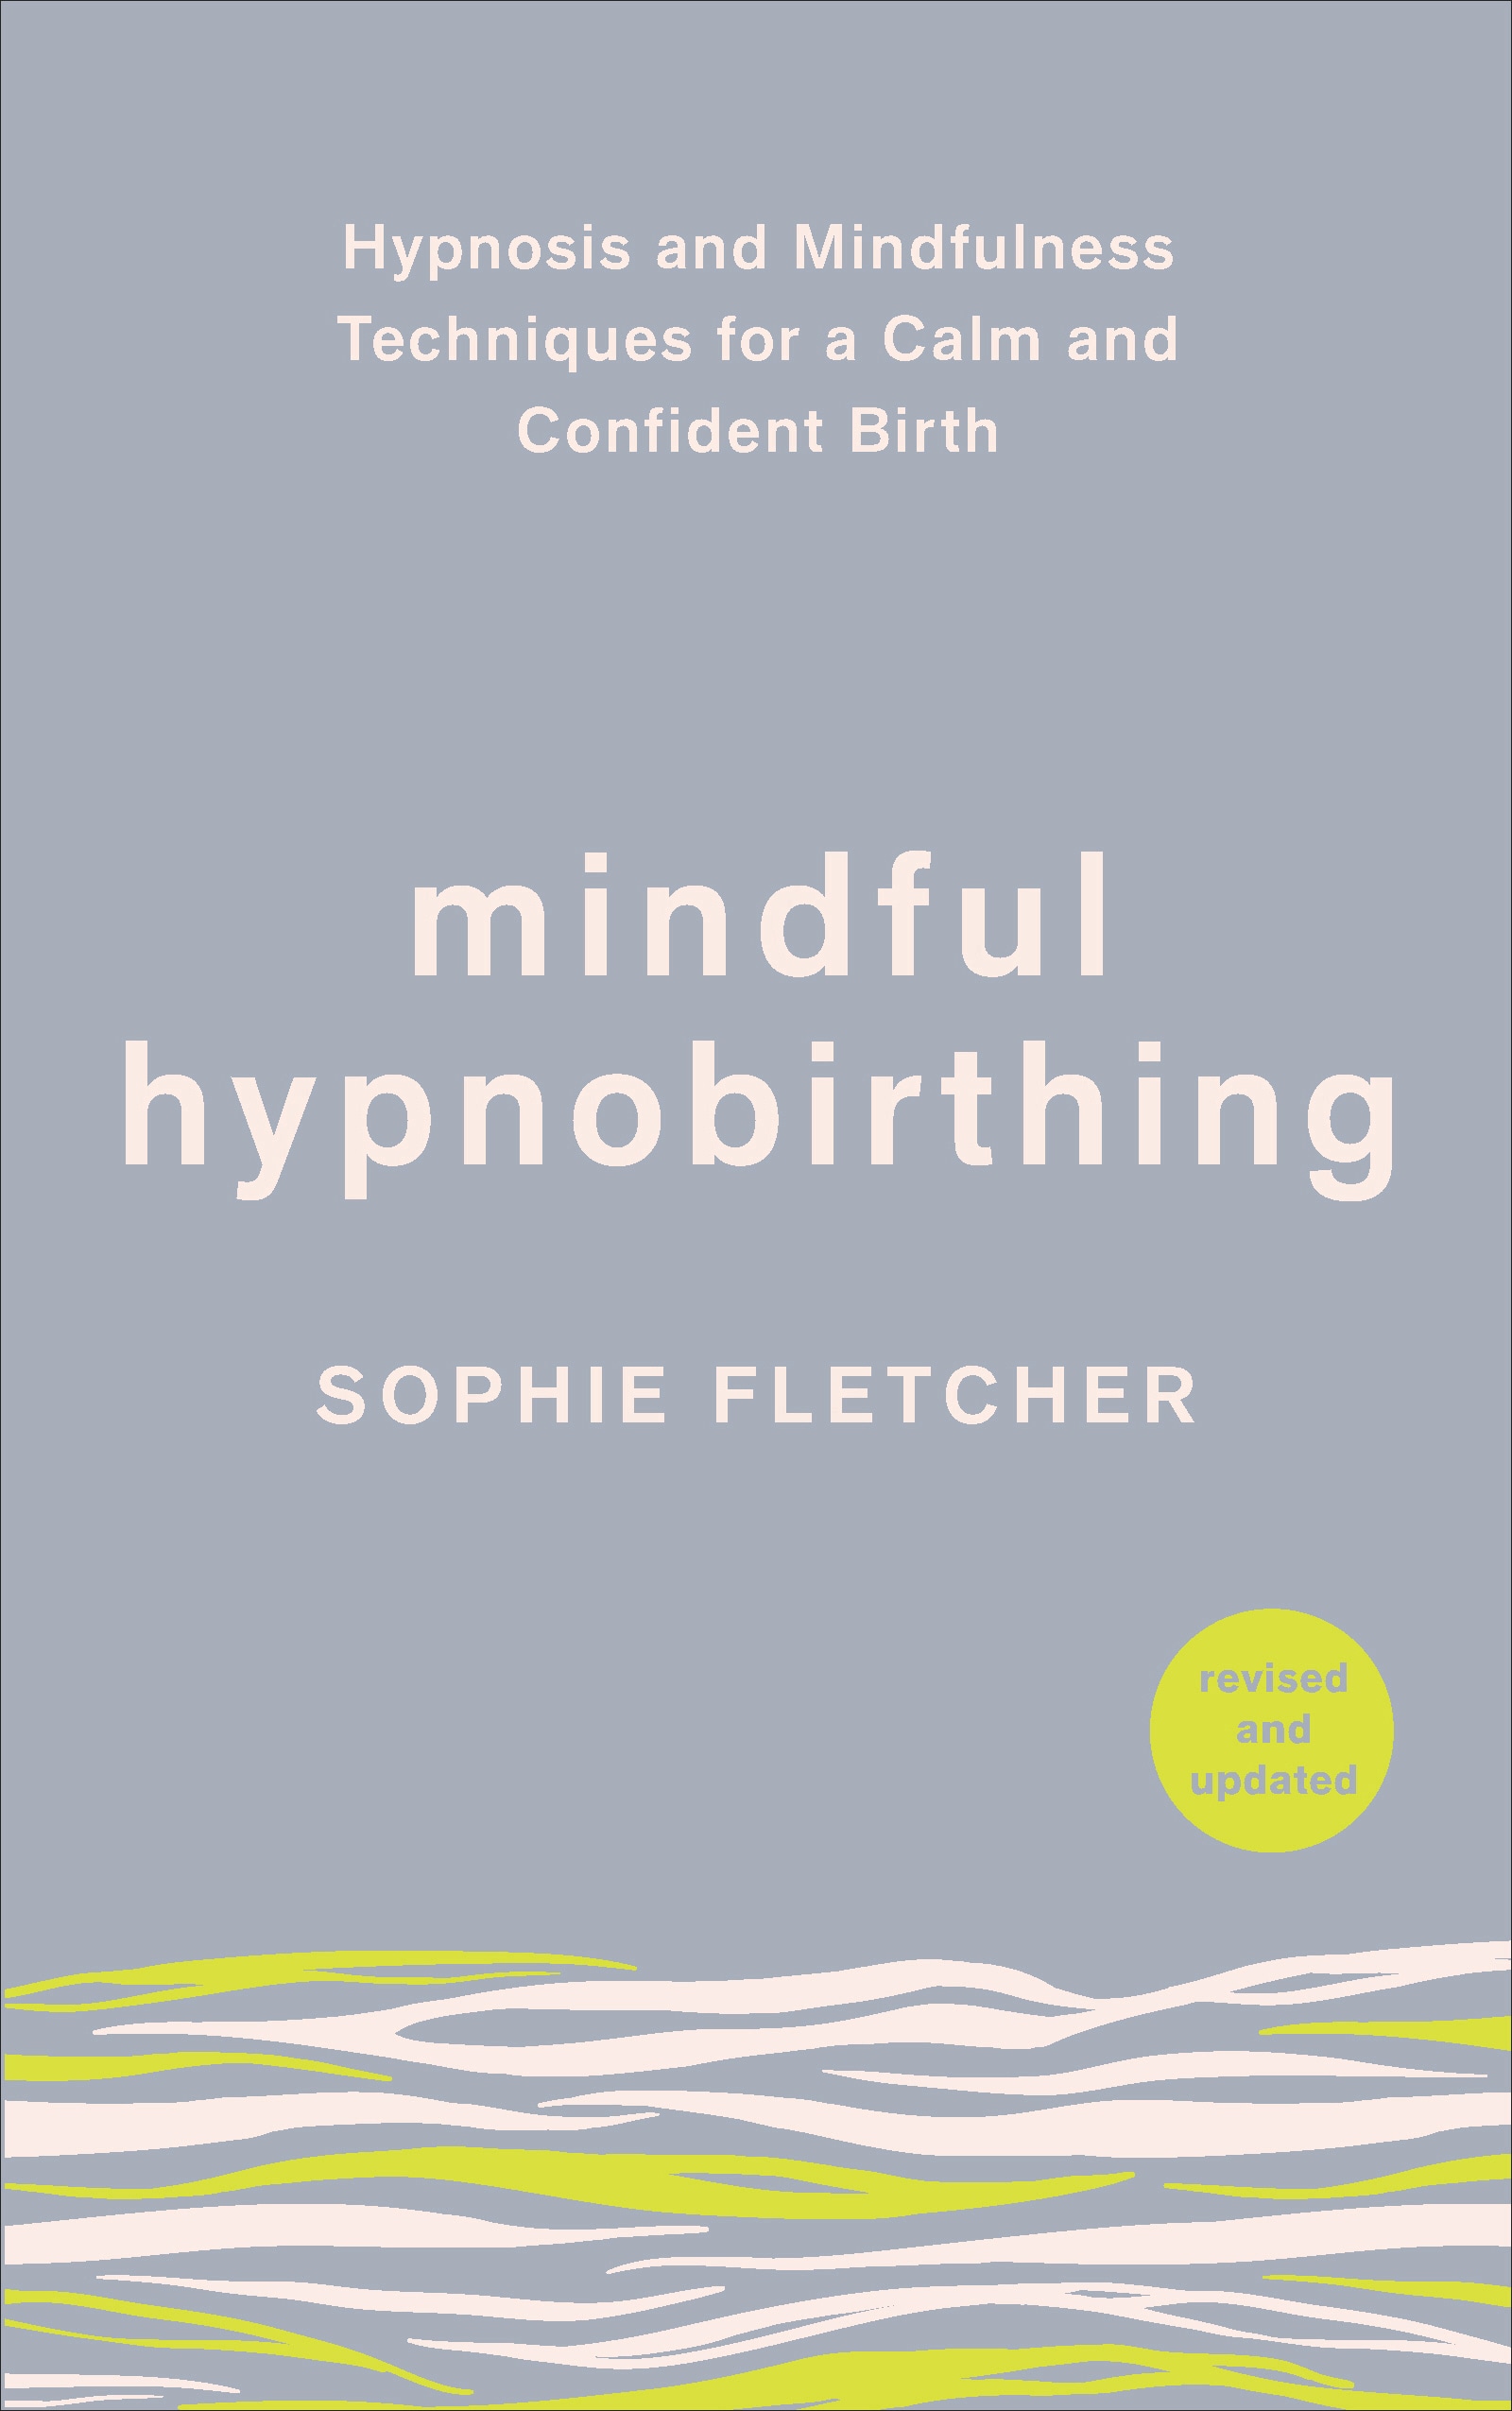 Book “Mindful Hypnobirthing” by Sophie Fletcher — November 7, 2019